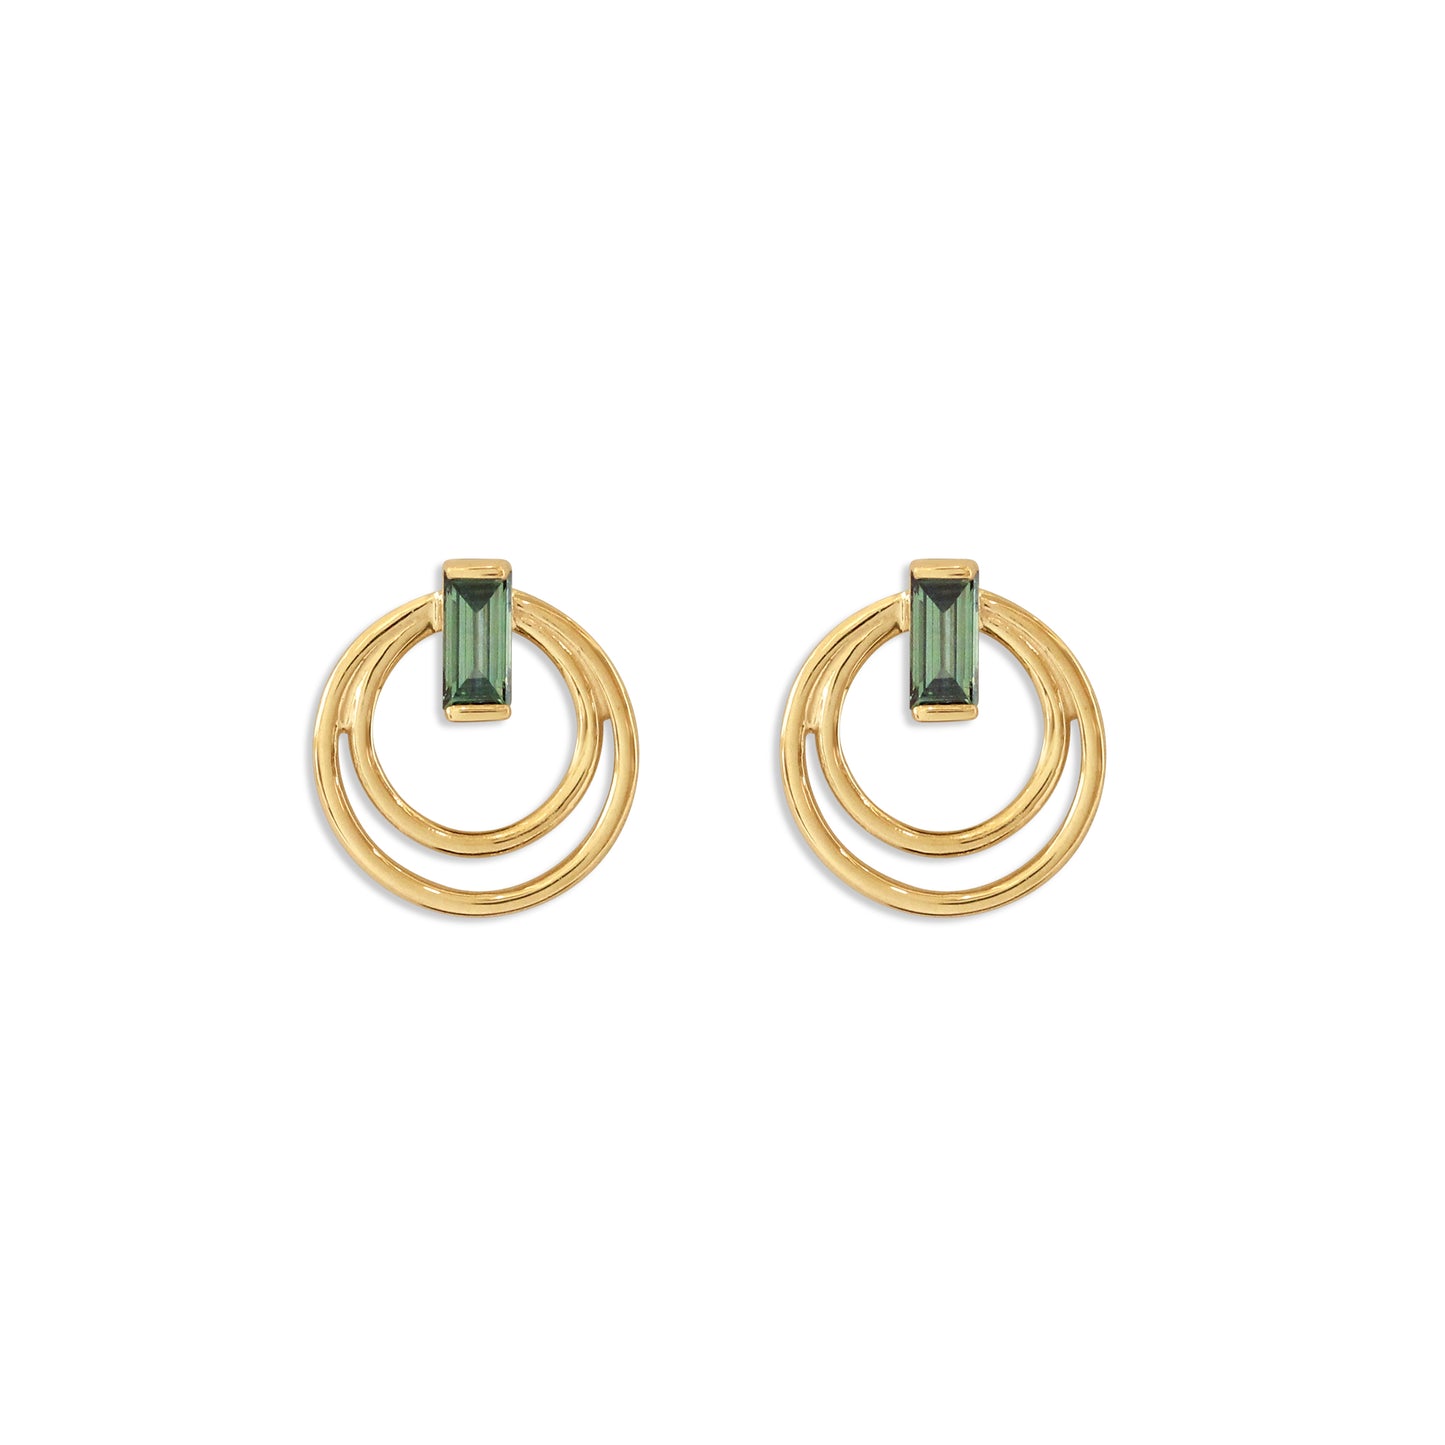 Pair of Ripple Earring / Lab green baguette diamond earrings